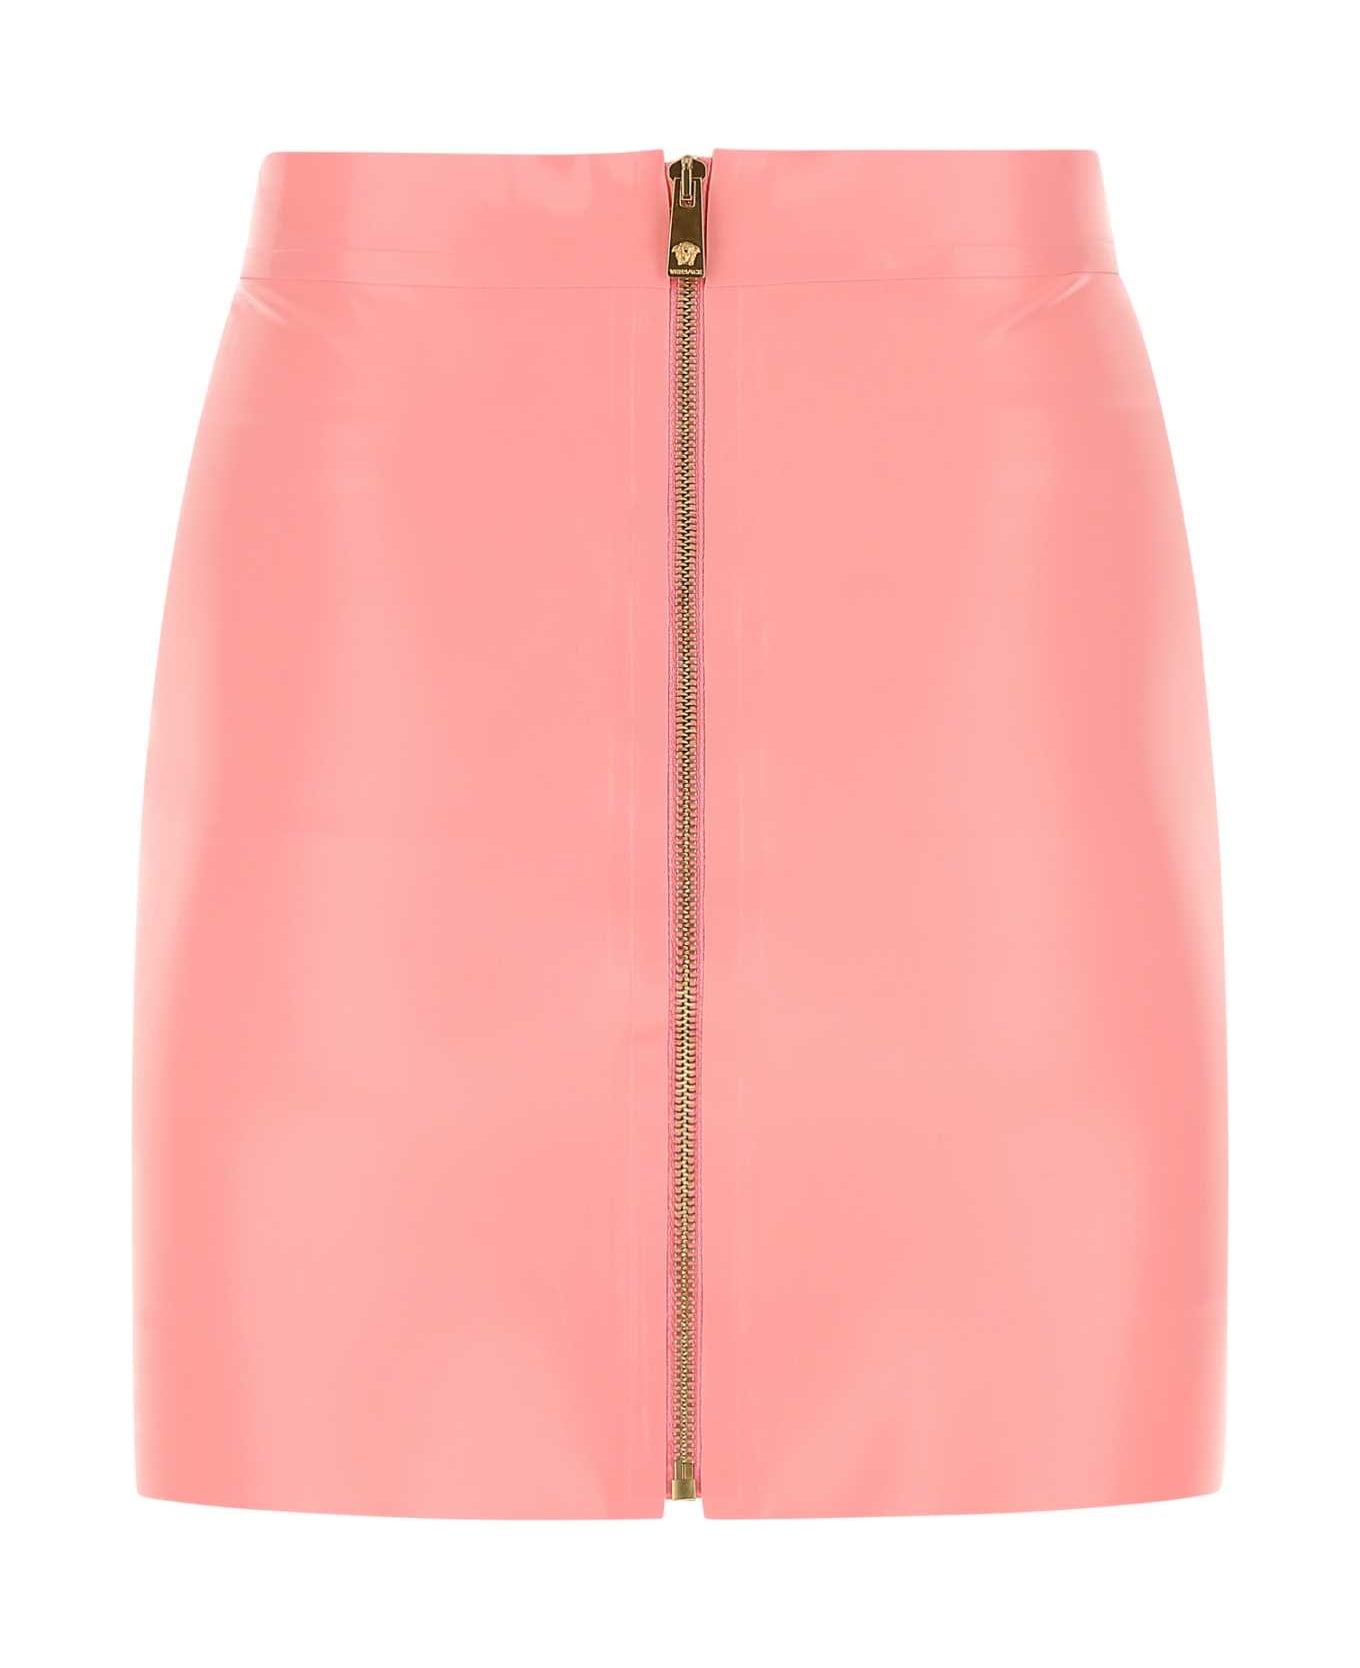 Versace Pink Latex Mini Skirt - 1PD50 スカート